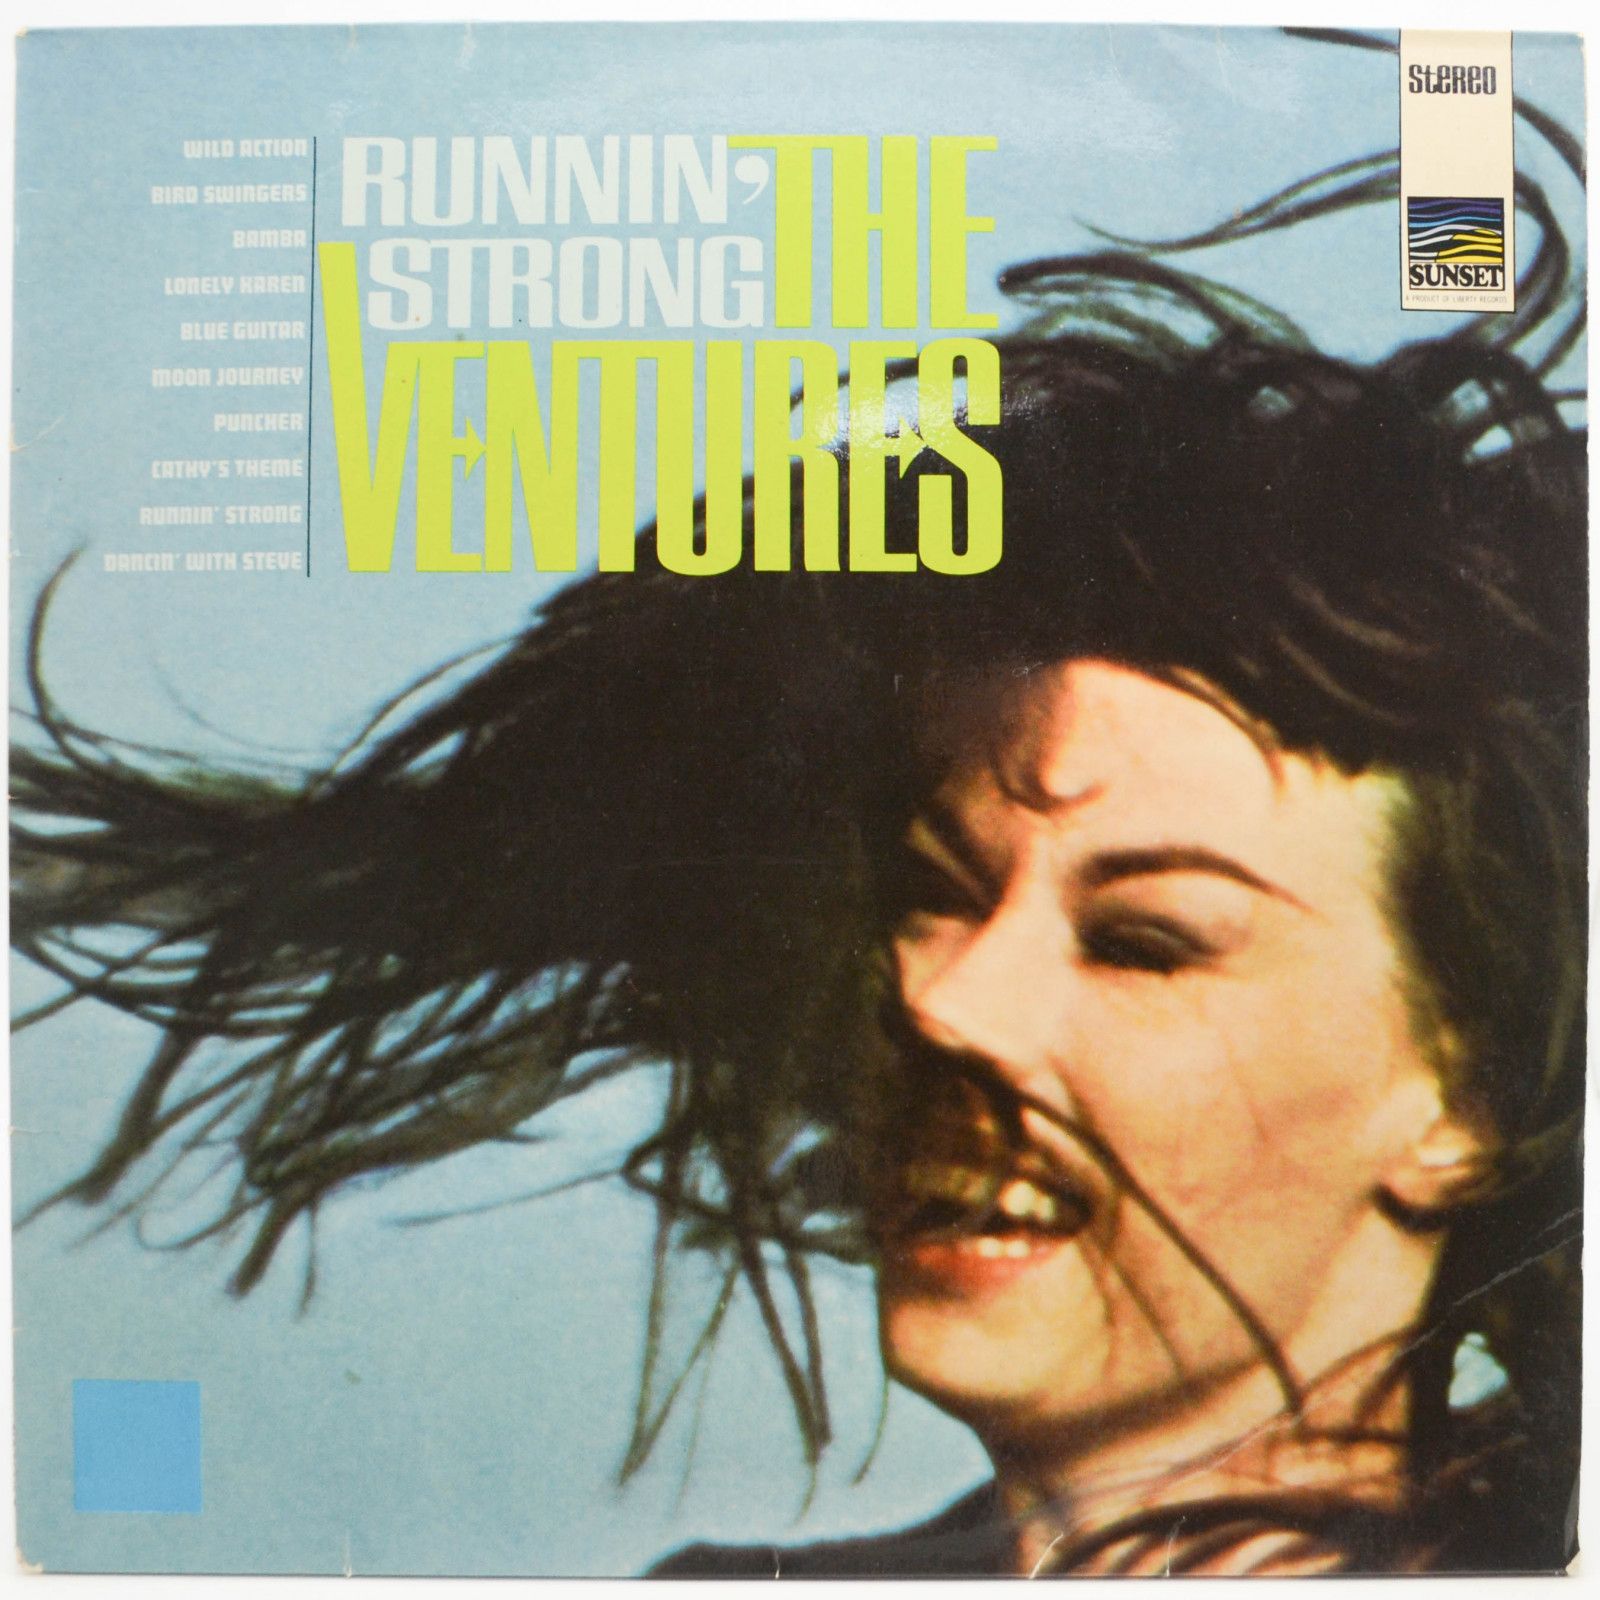 Ventures — Runnin’ Strong, 1966